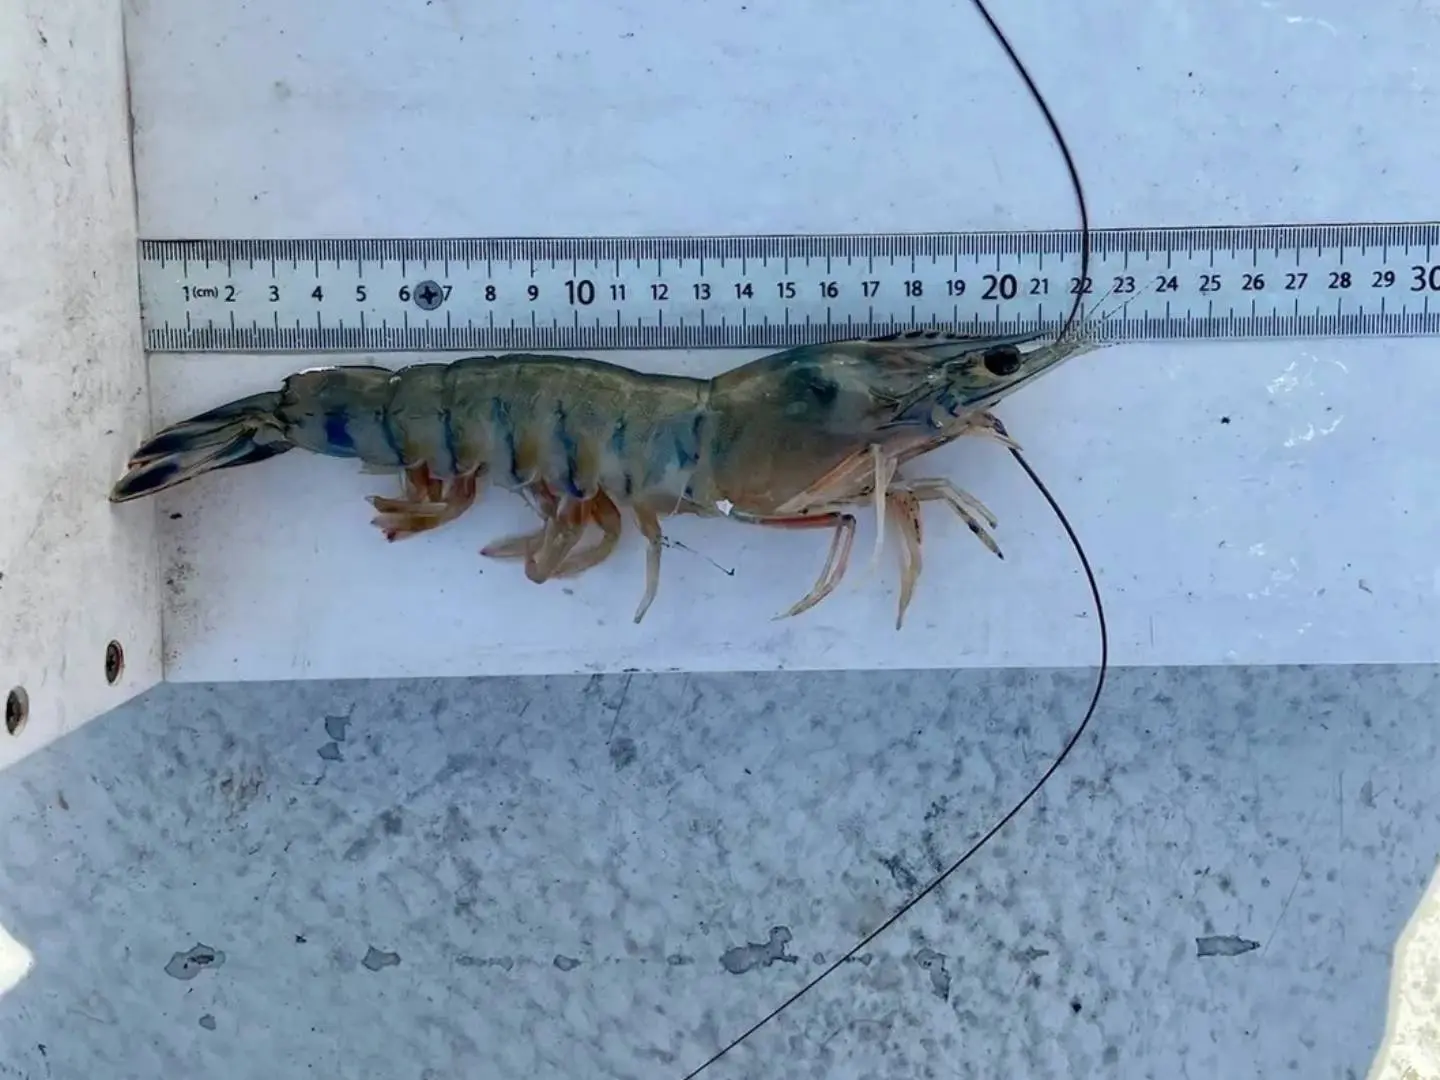 Shrimp being measured during the Pamlico Sound Survey. Cara Kowalchyk, North Carolina Department of Environmental Quality.